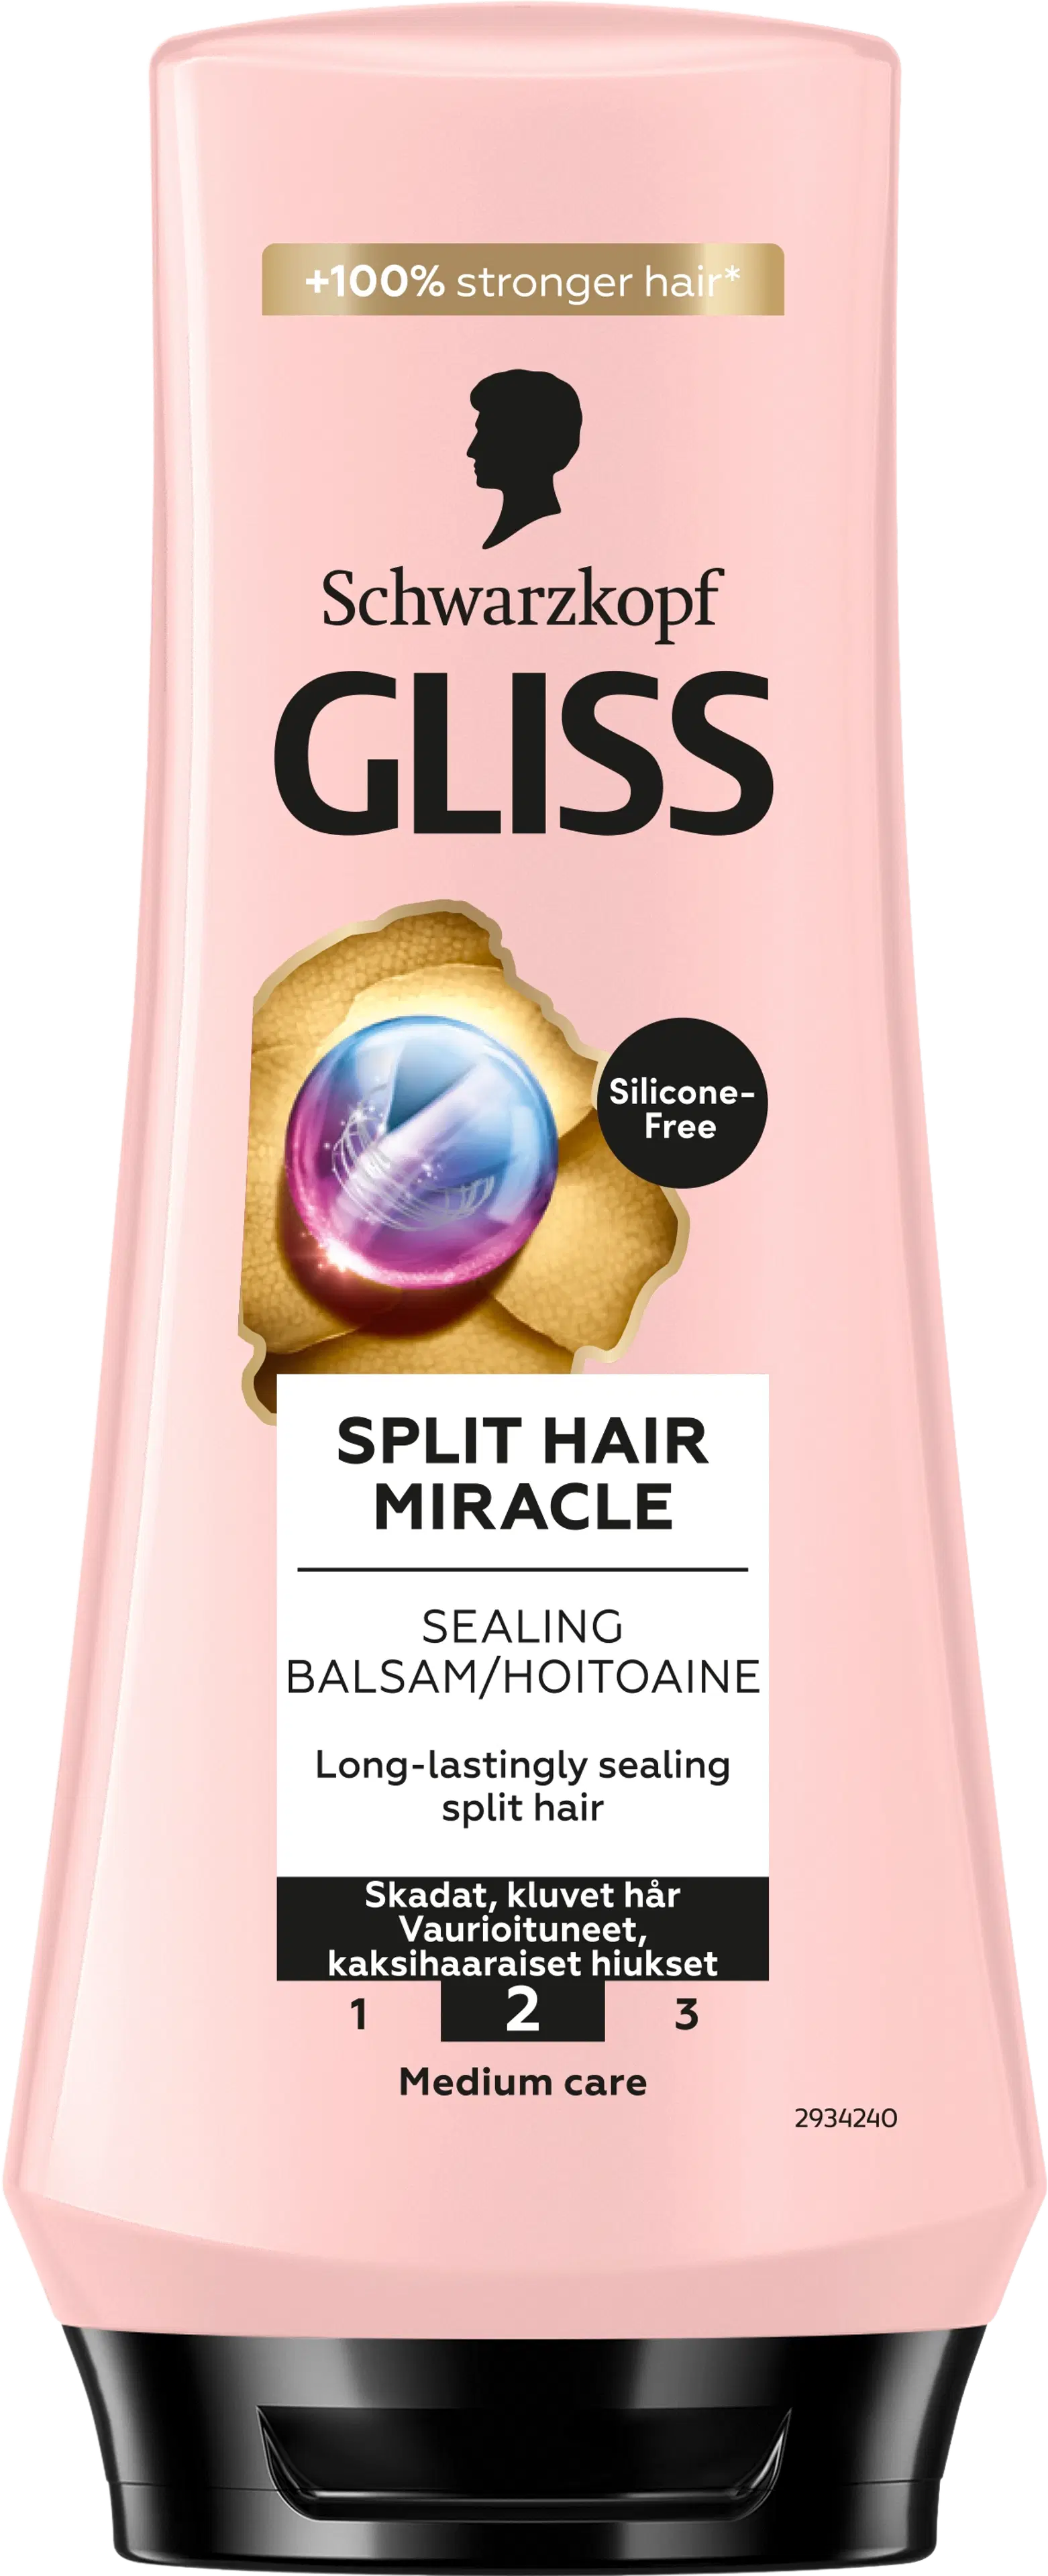 Schwarzkopf Gliss Split Hair Miracle hoitoaine 200 ml